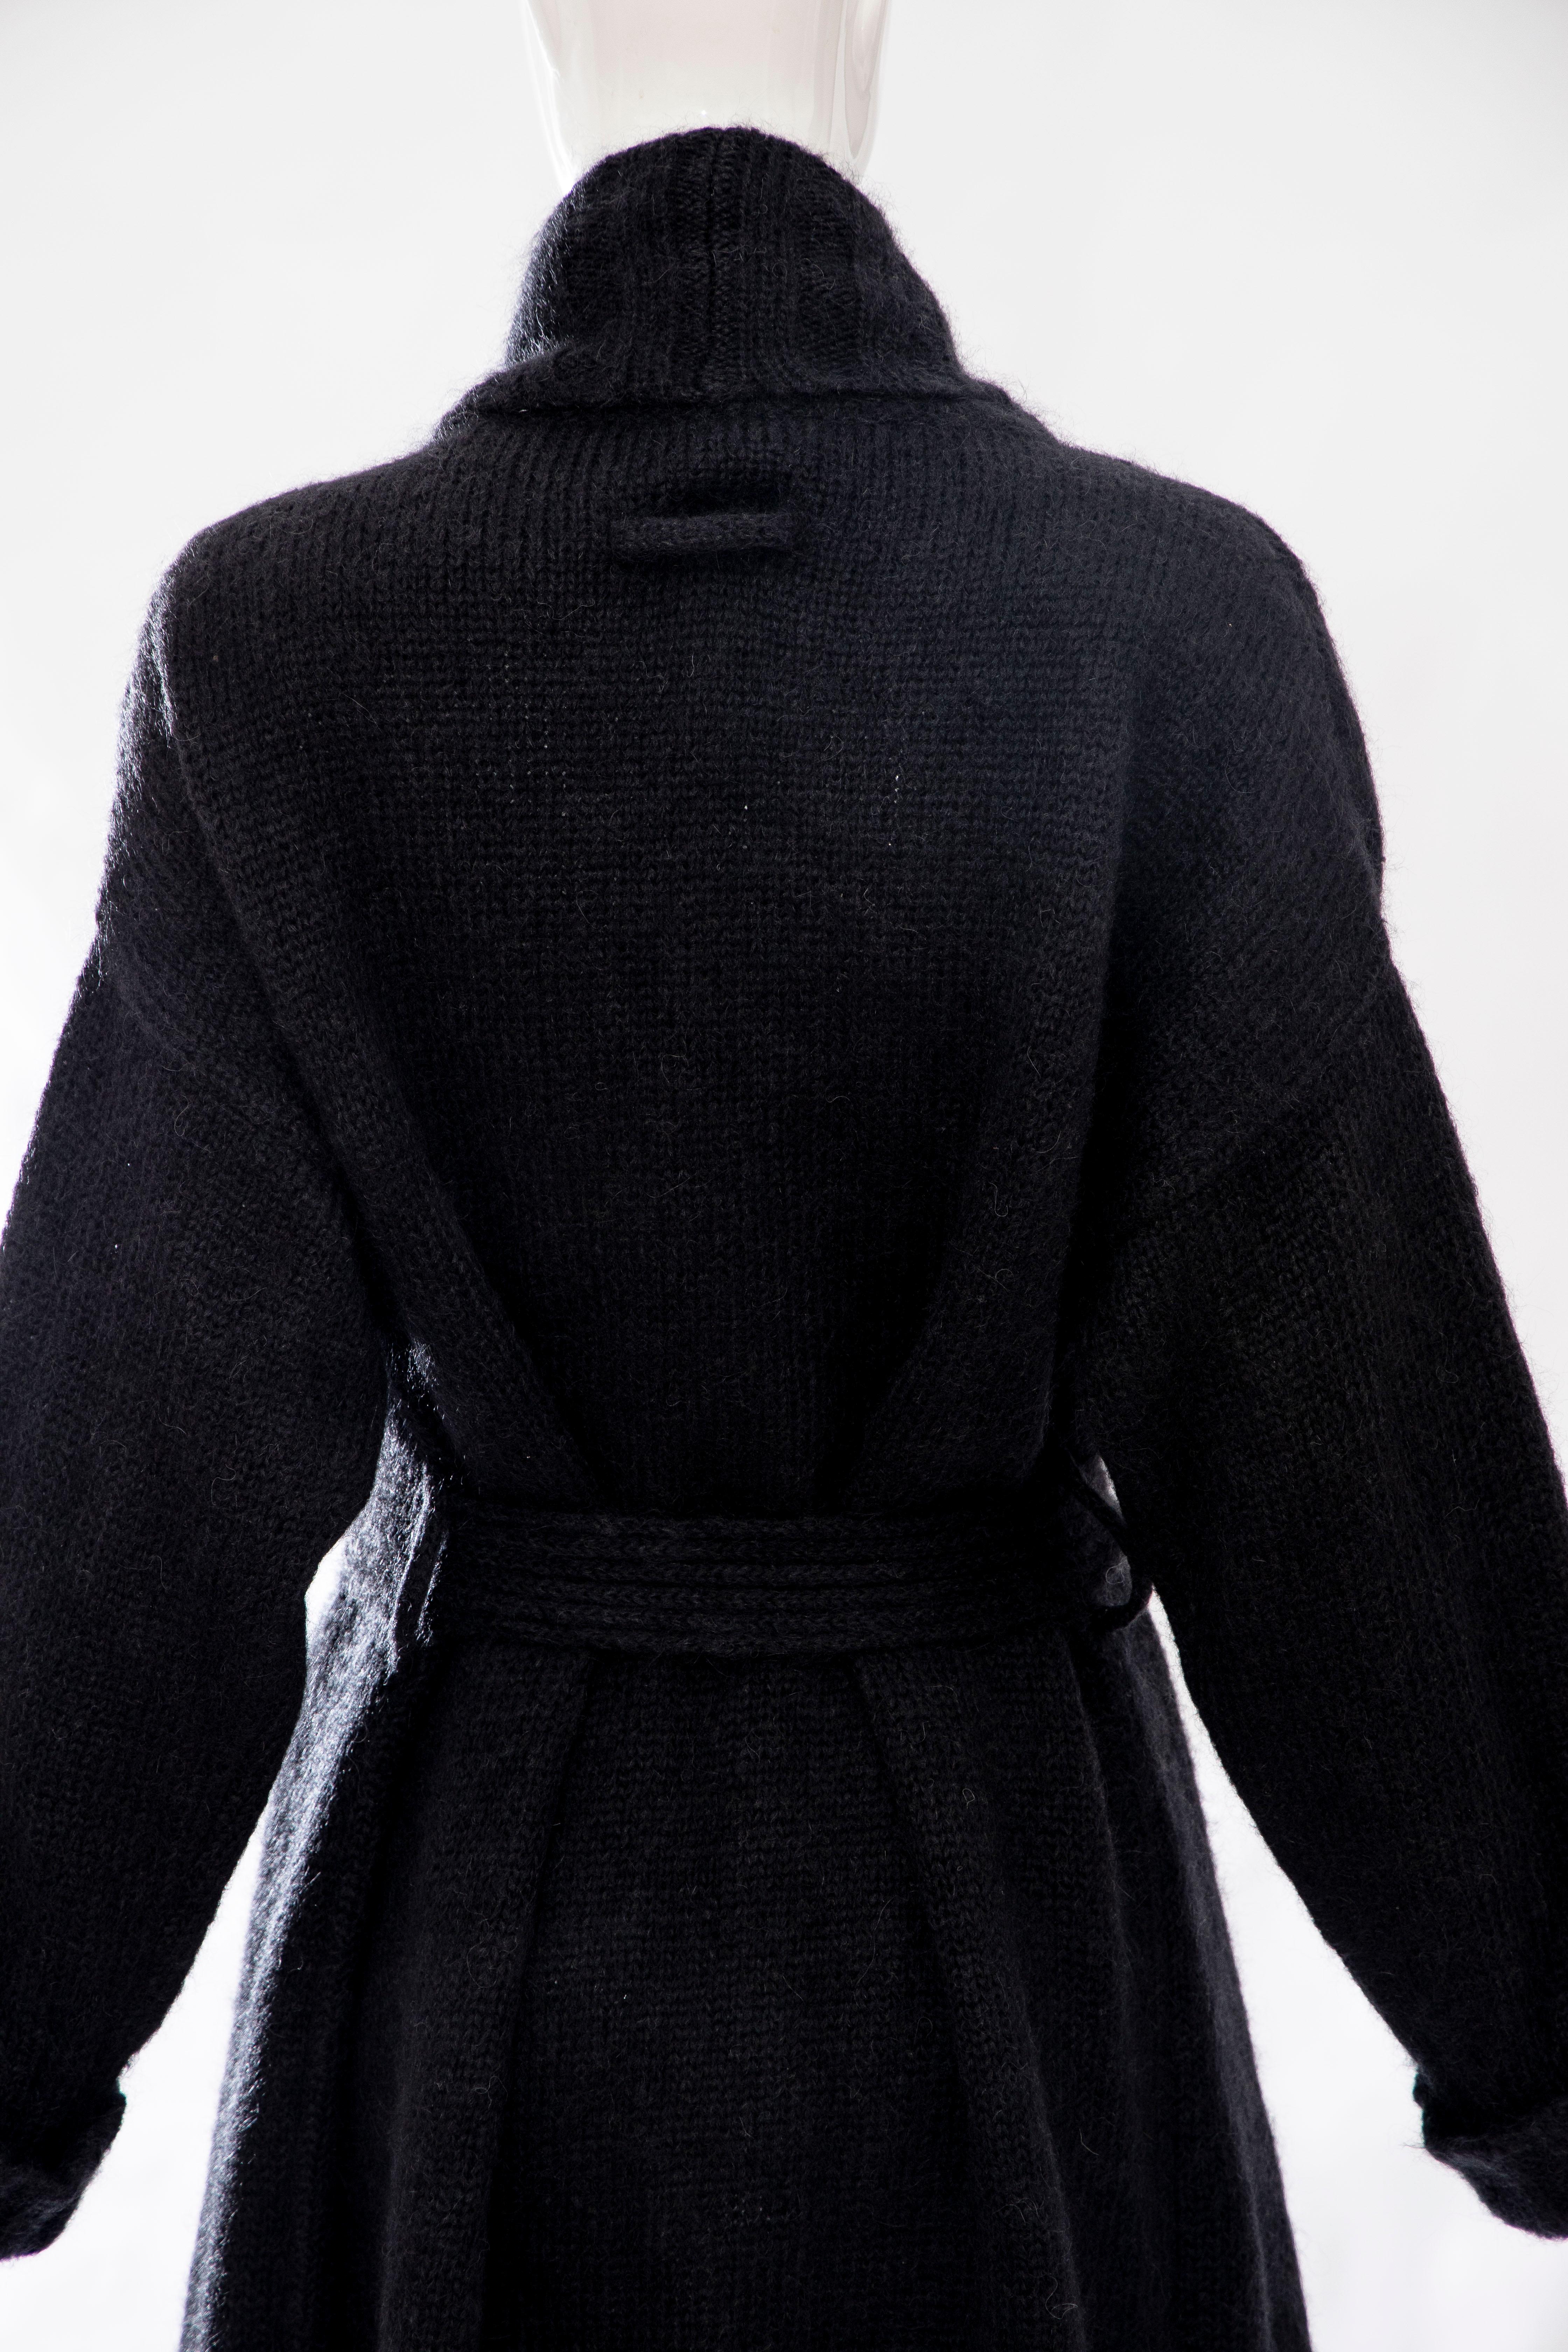 Jean Paul Gaultier Runway Mohair Knit Appliquéd Coins Sweater Dress , Fall 2010 For Sale 4